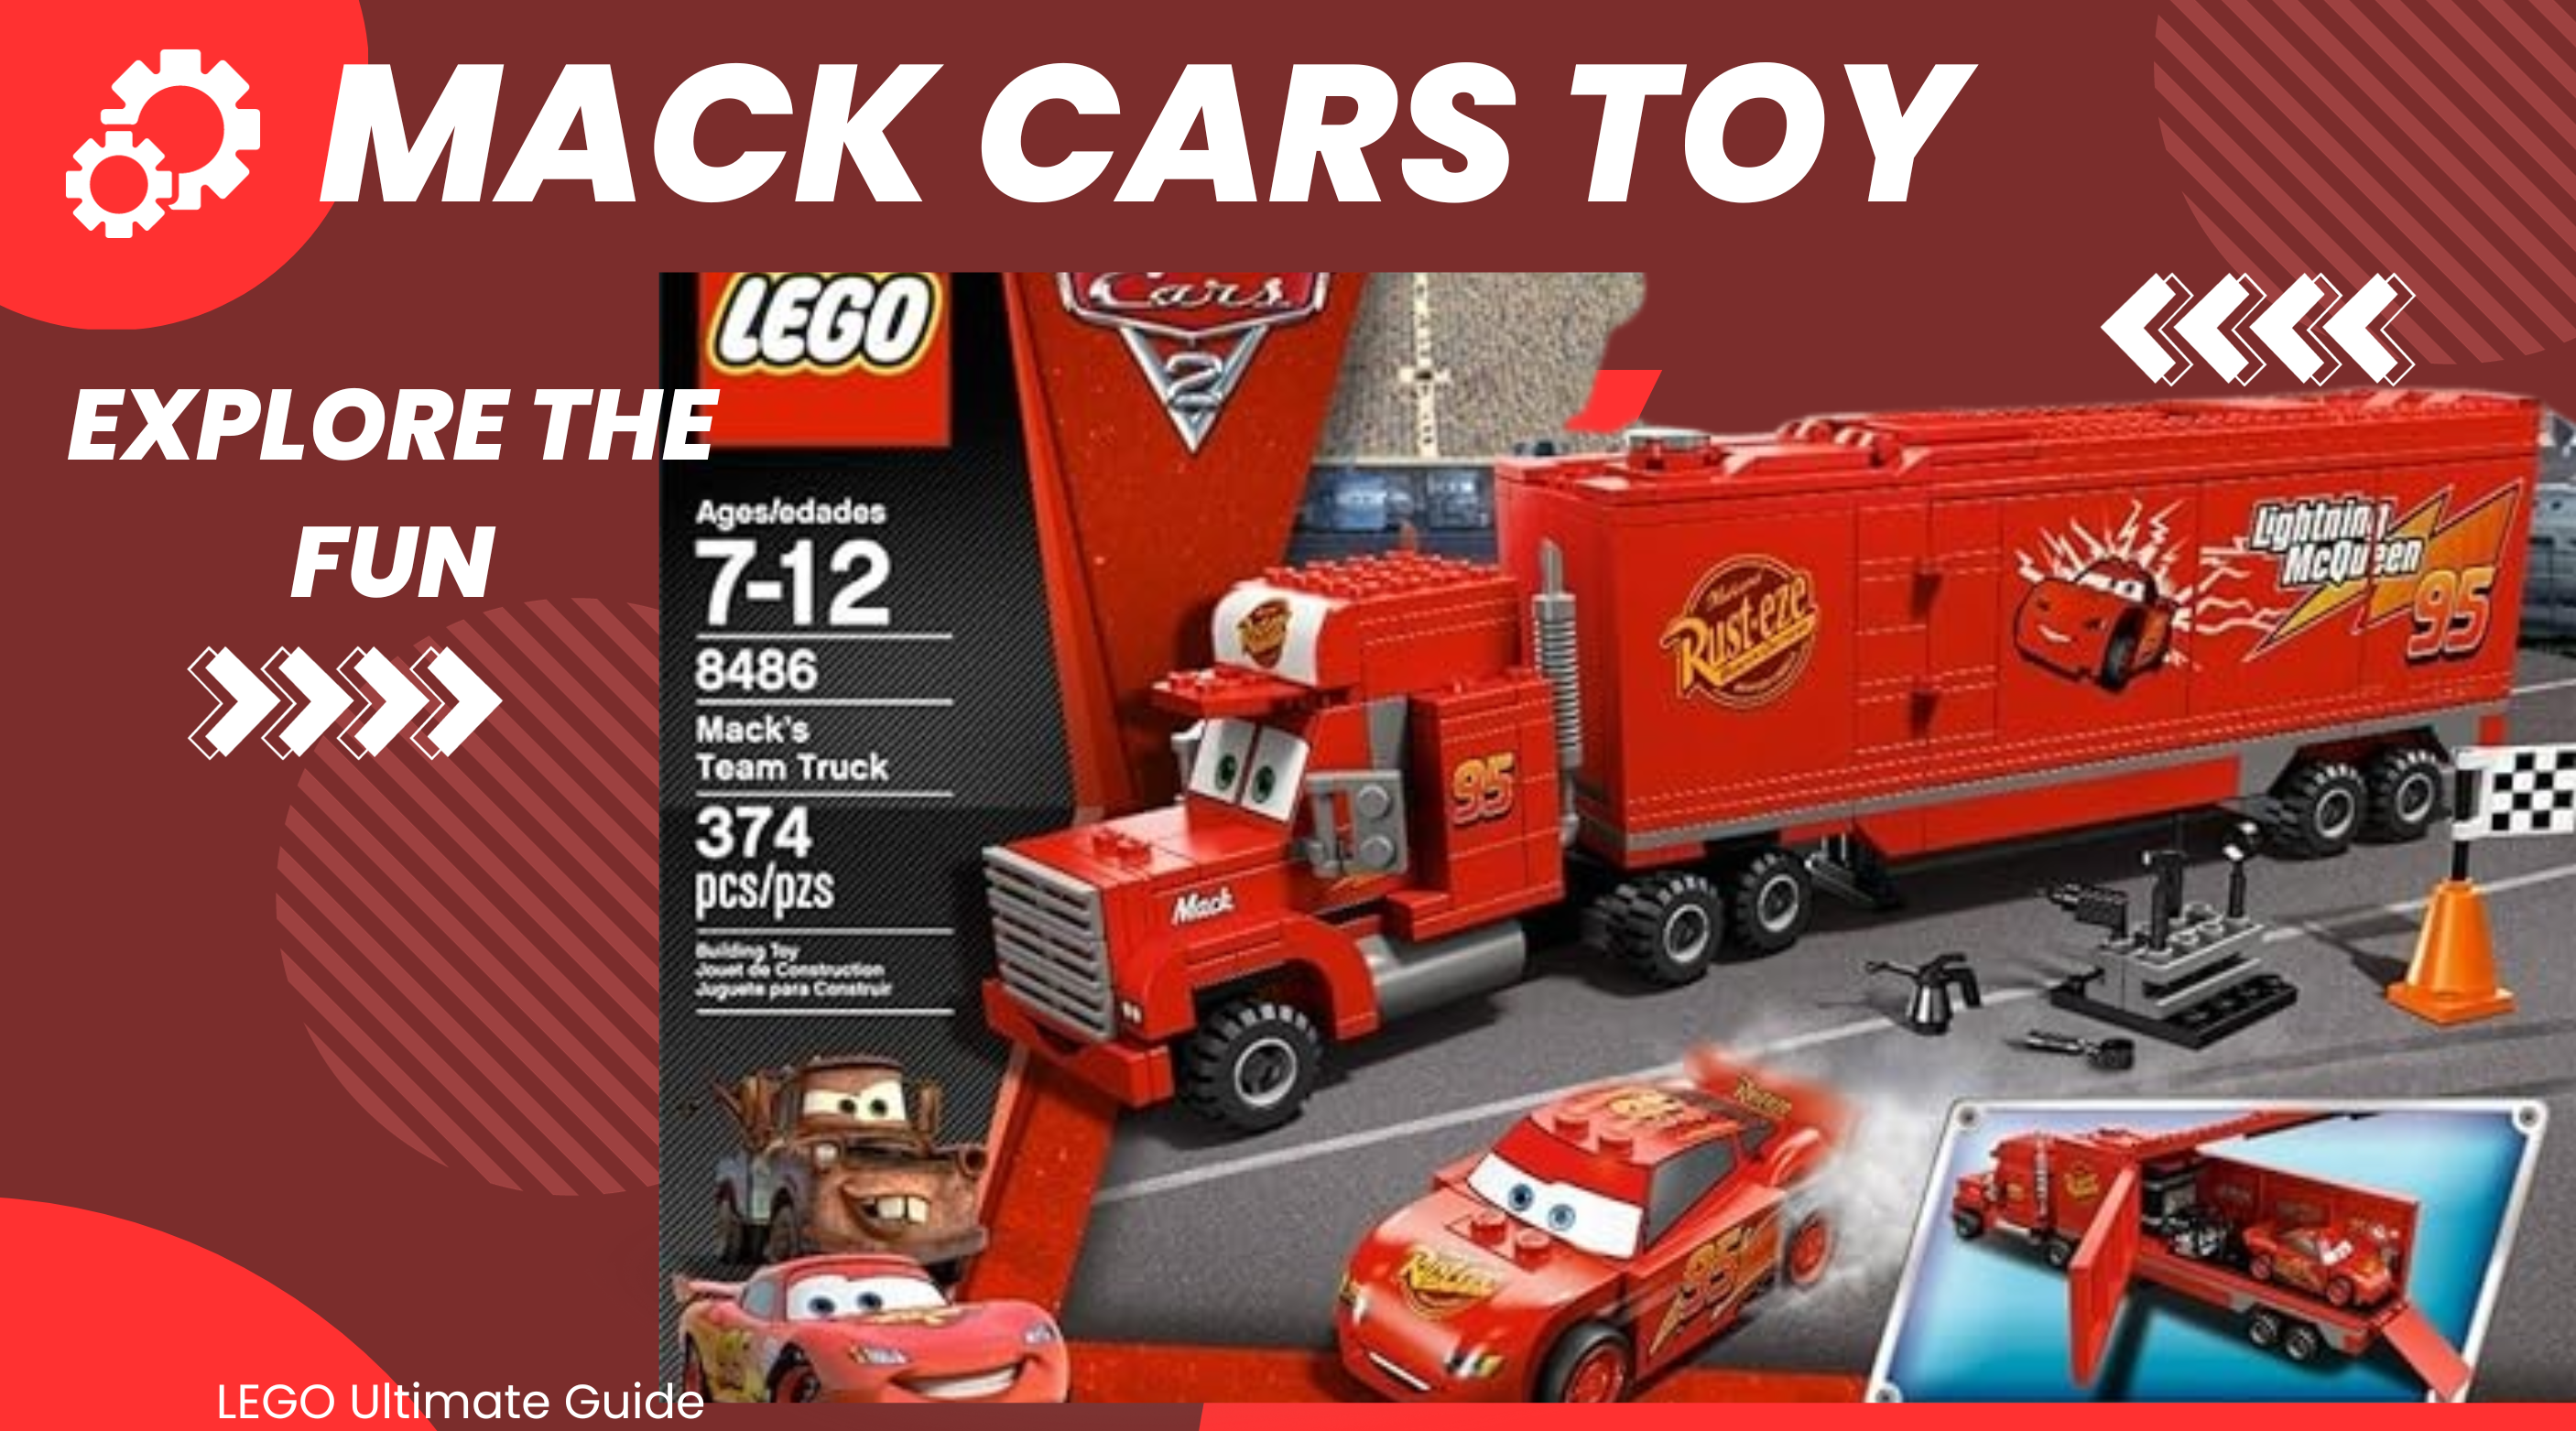 Mack Cars Toy